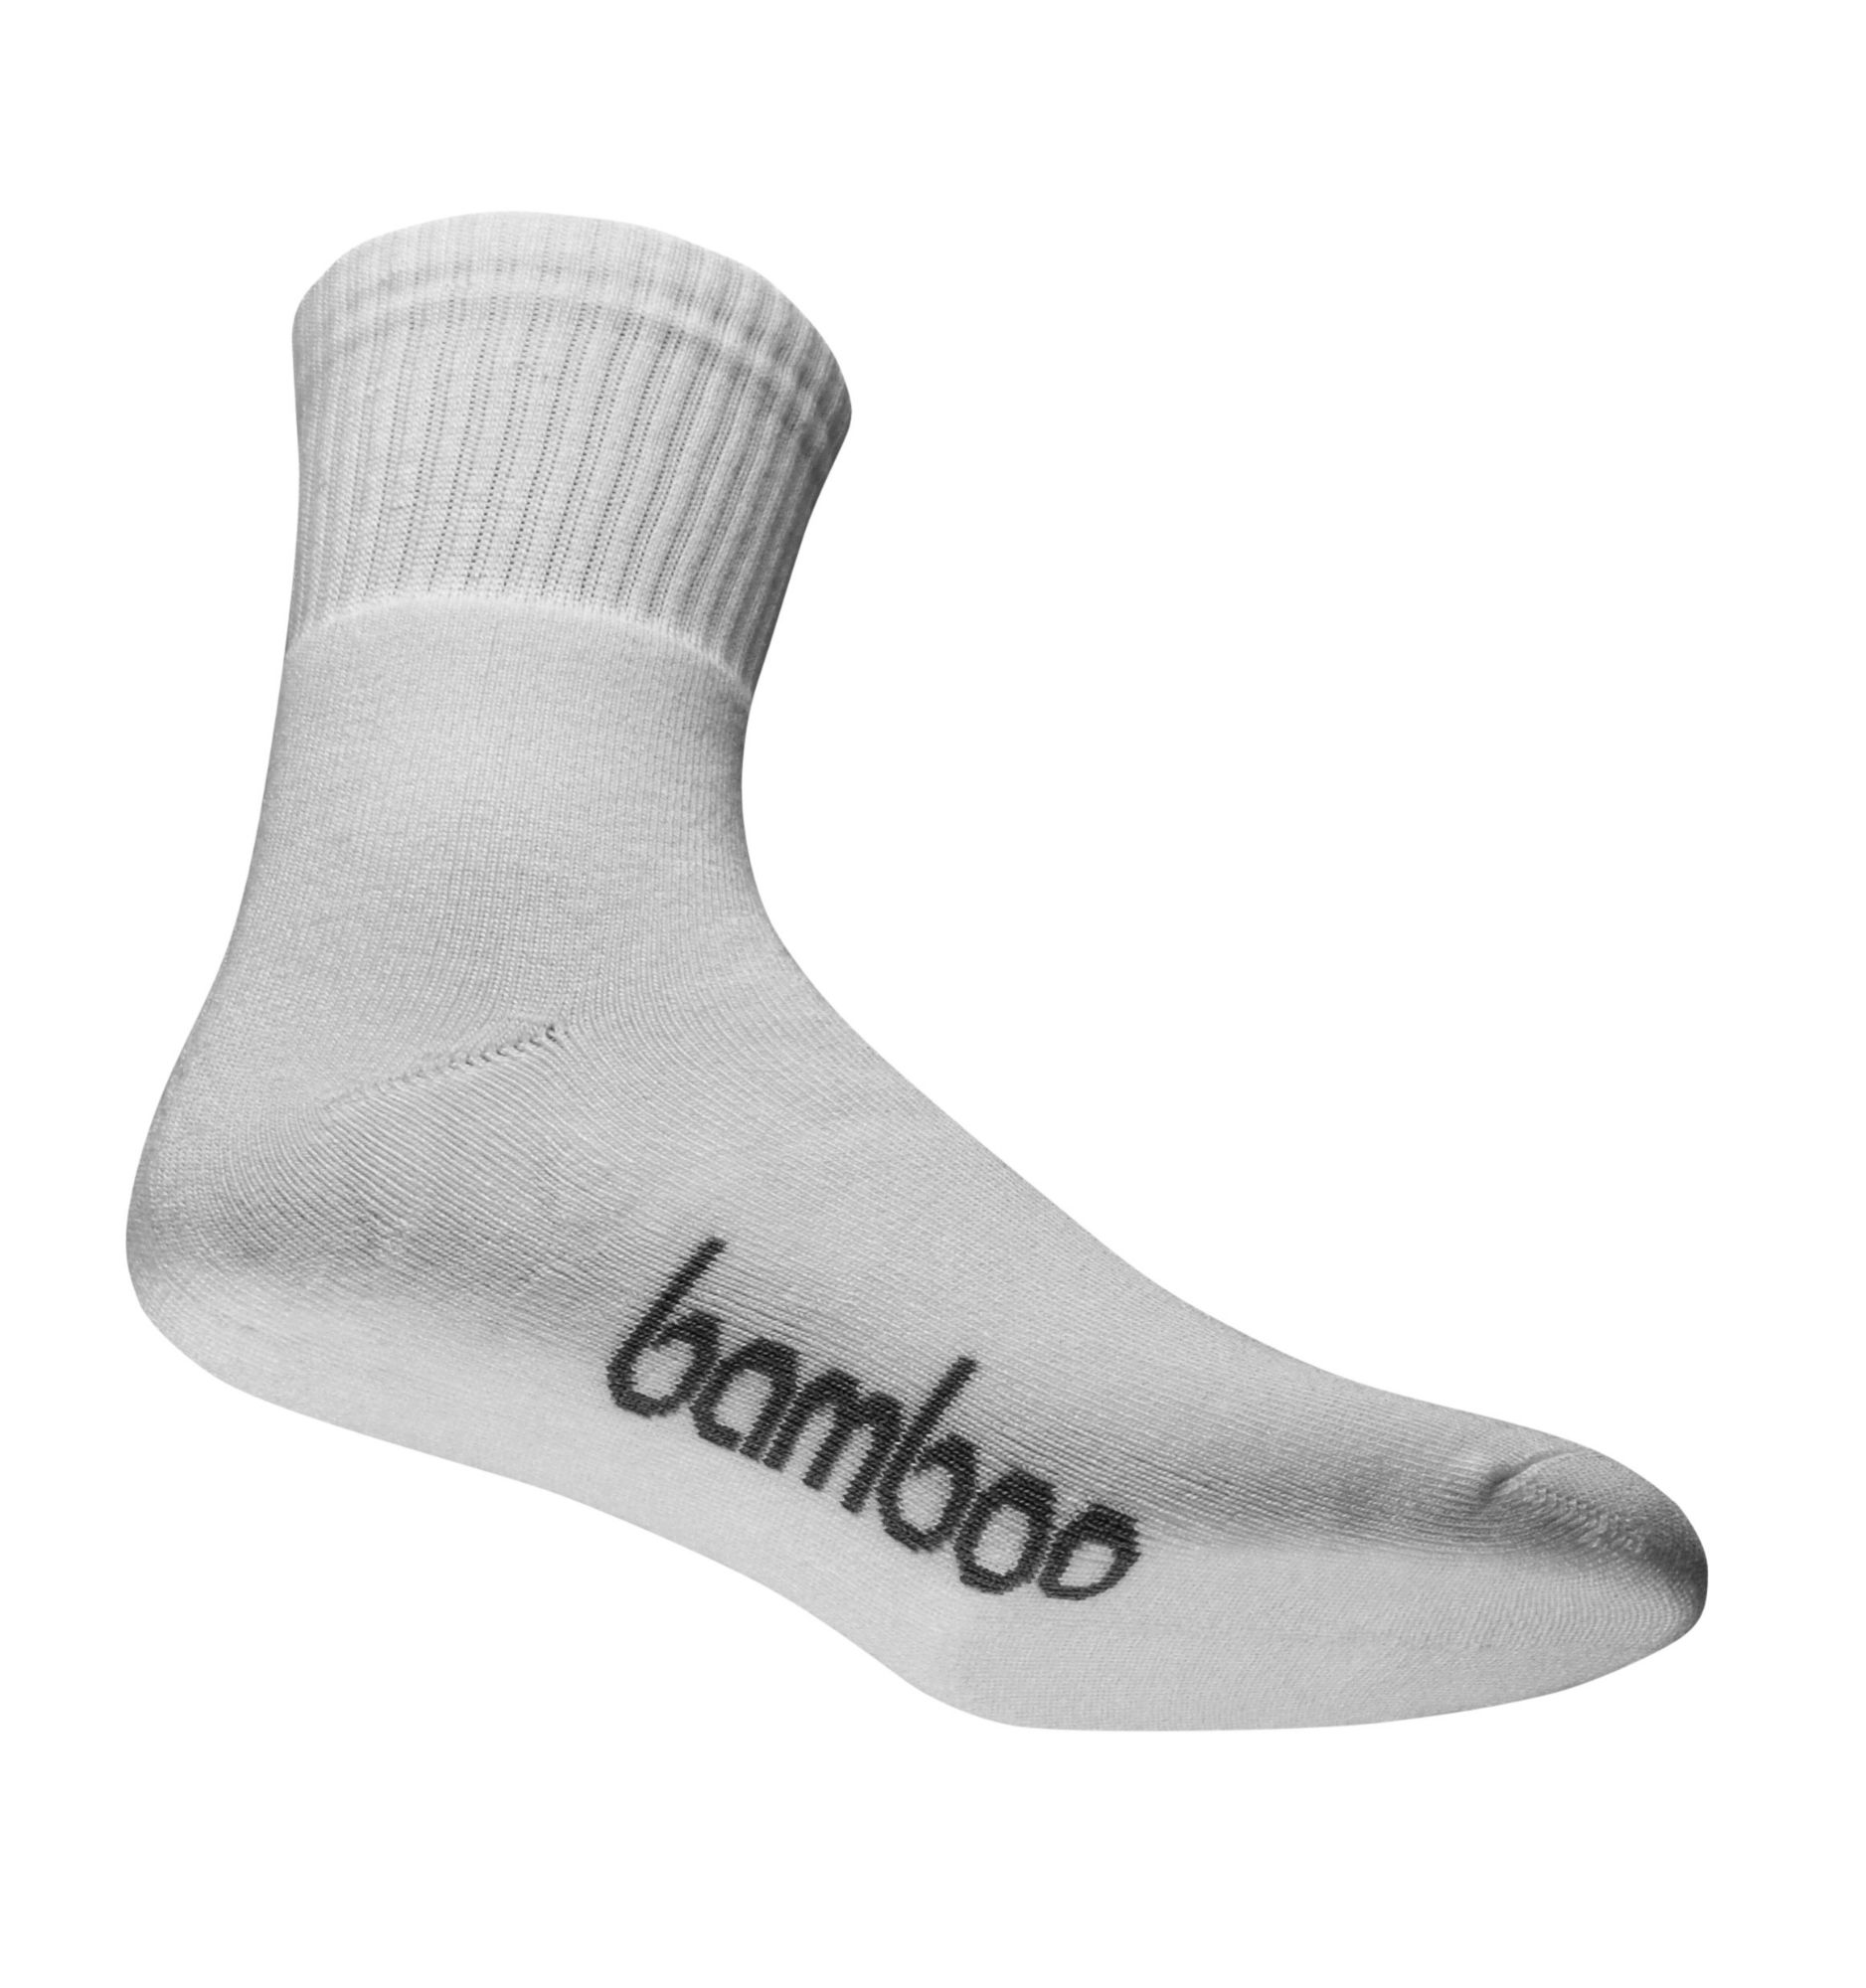 crew sock - hooked on bamboo